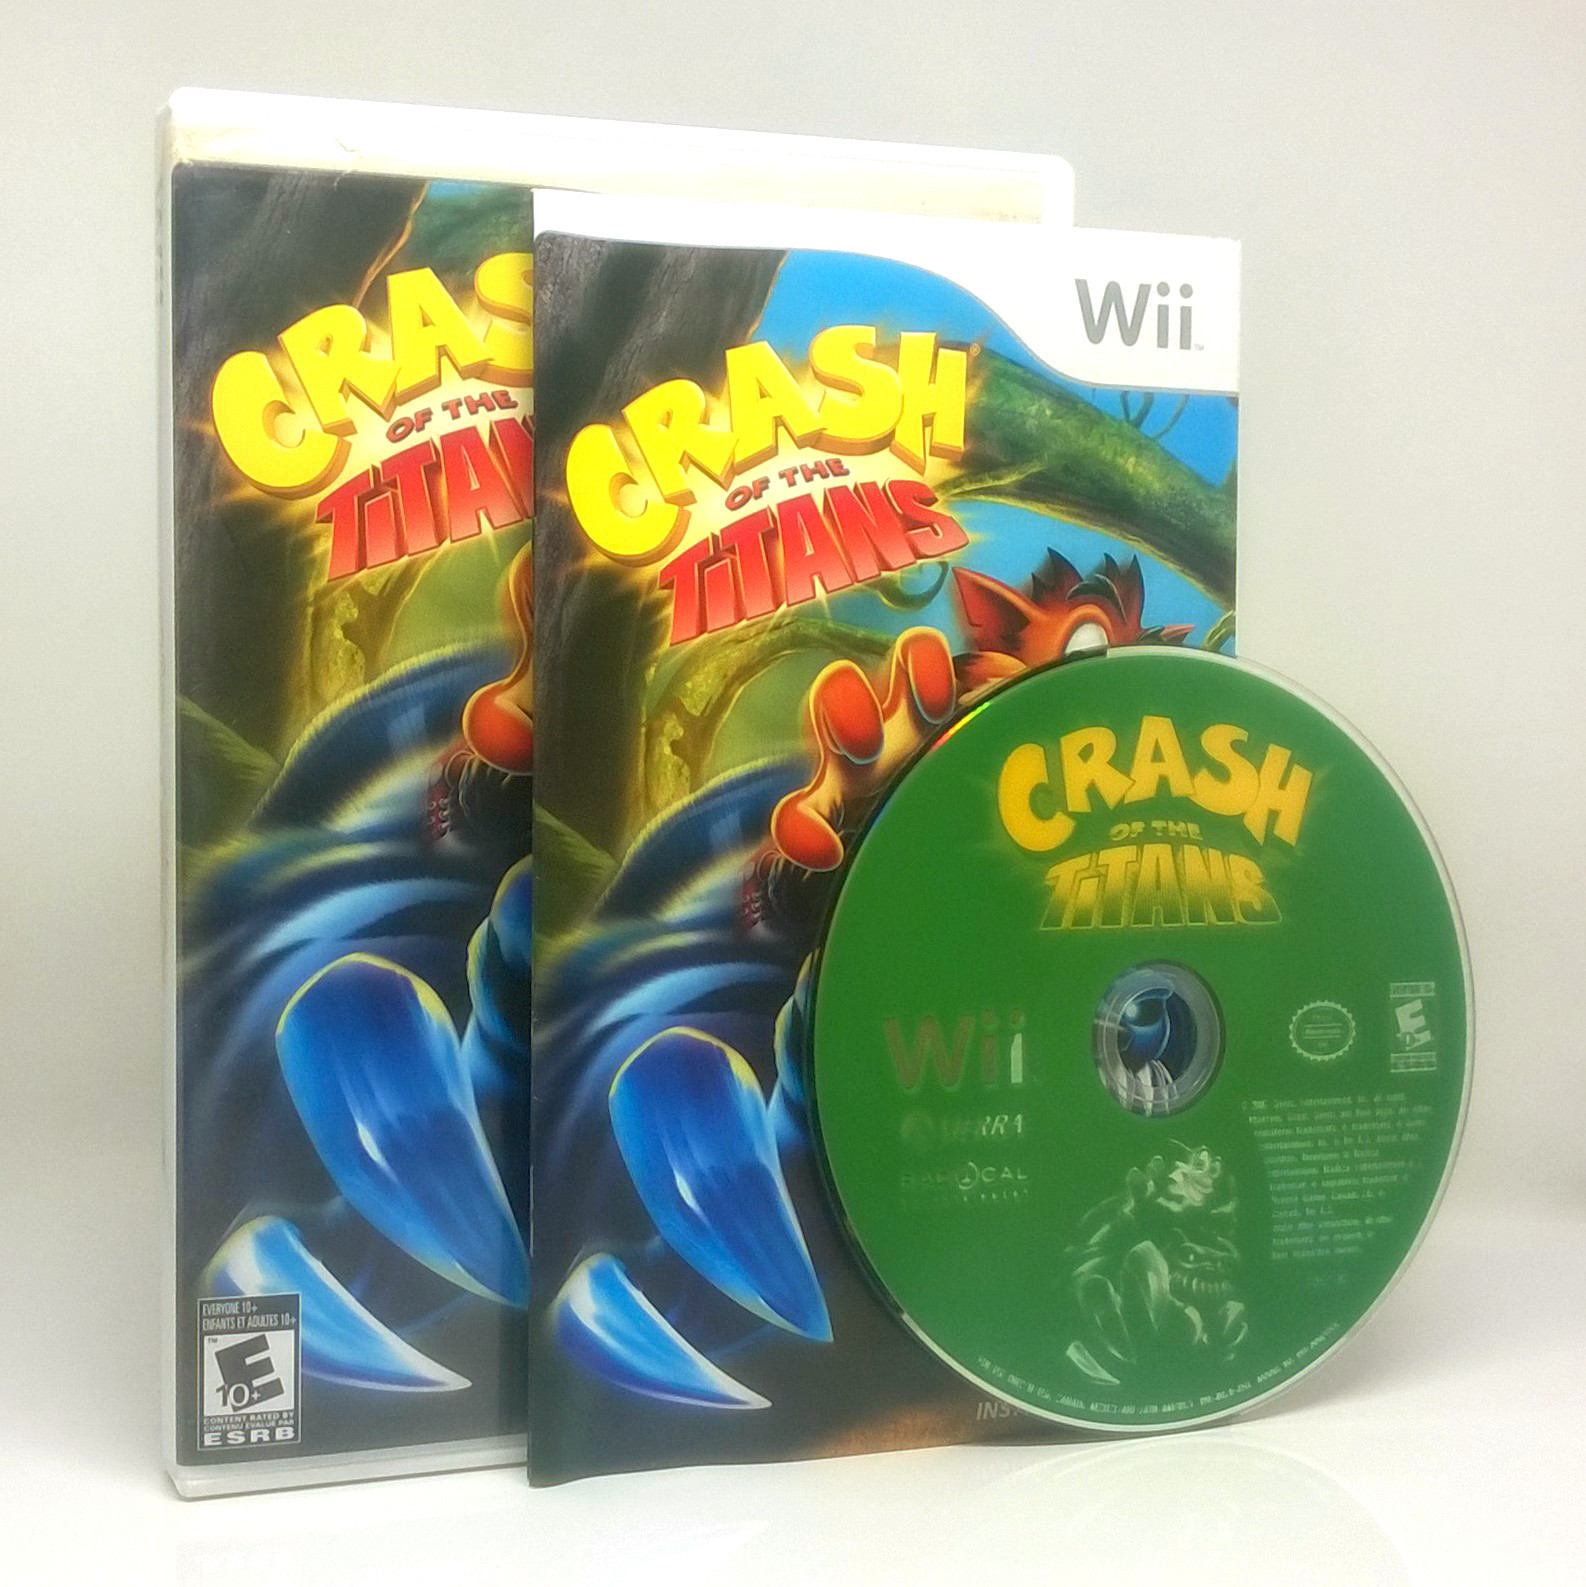 Crash of the Titans Nintendo Wii Game